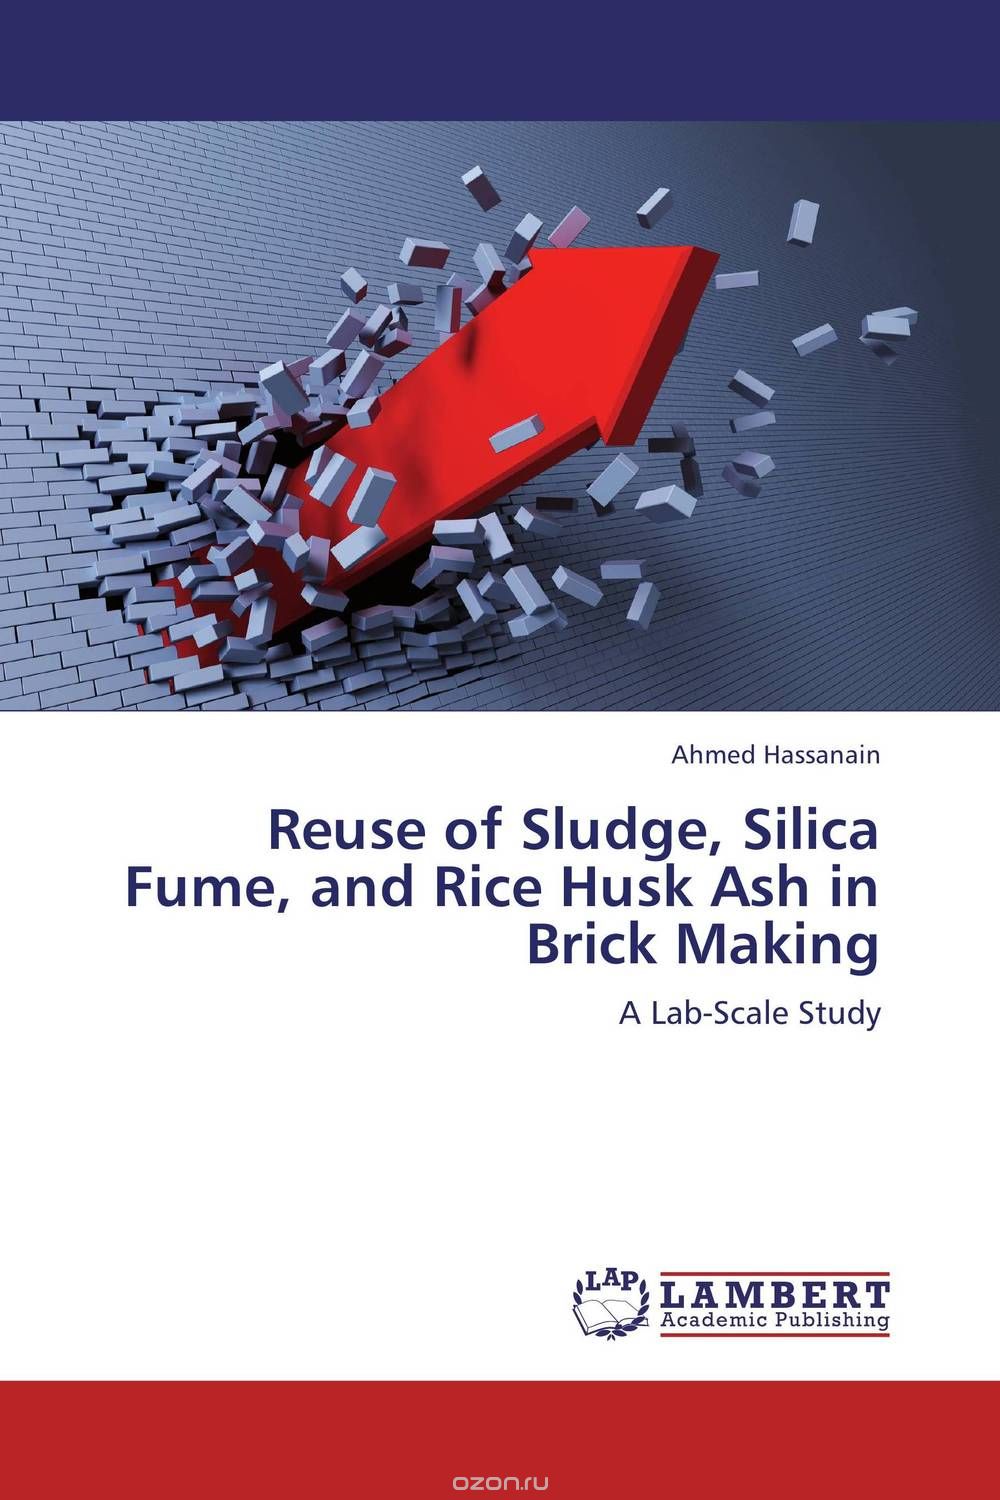 Скачать книгу "Reuse of Sludge, Silica Fume, and Rice Husk Ash in Brick Making"